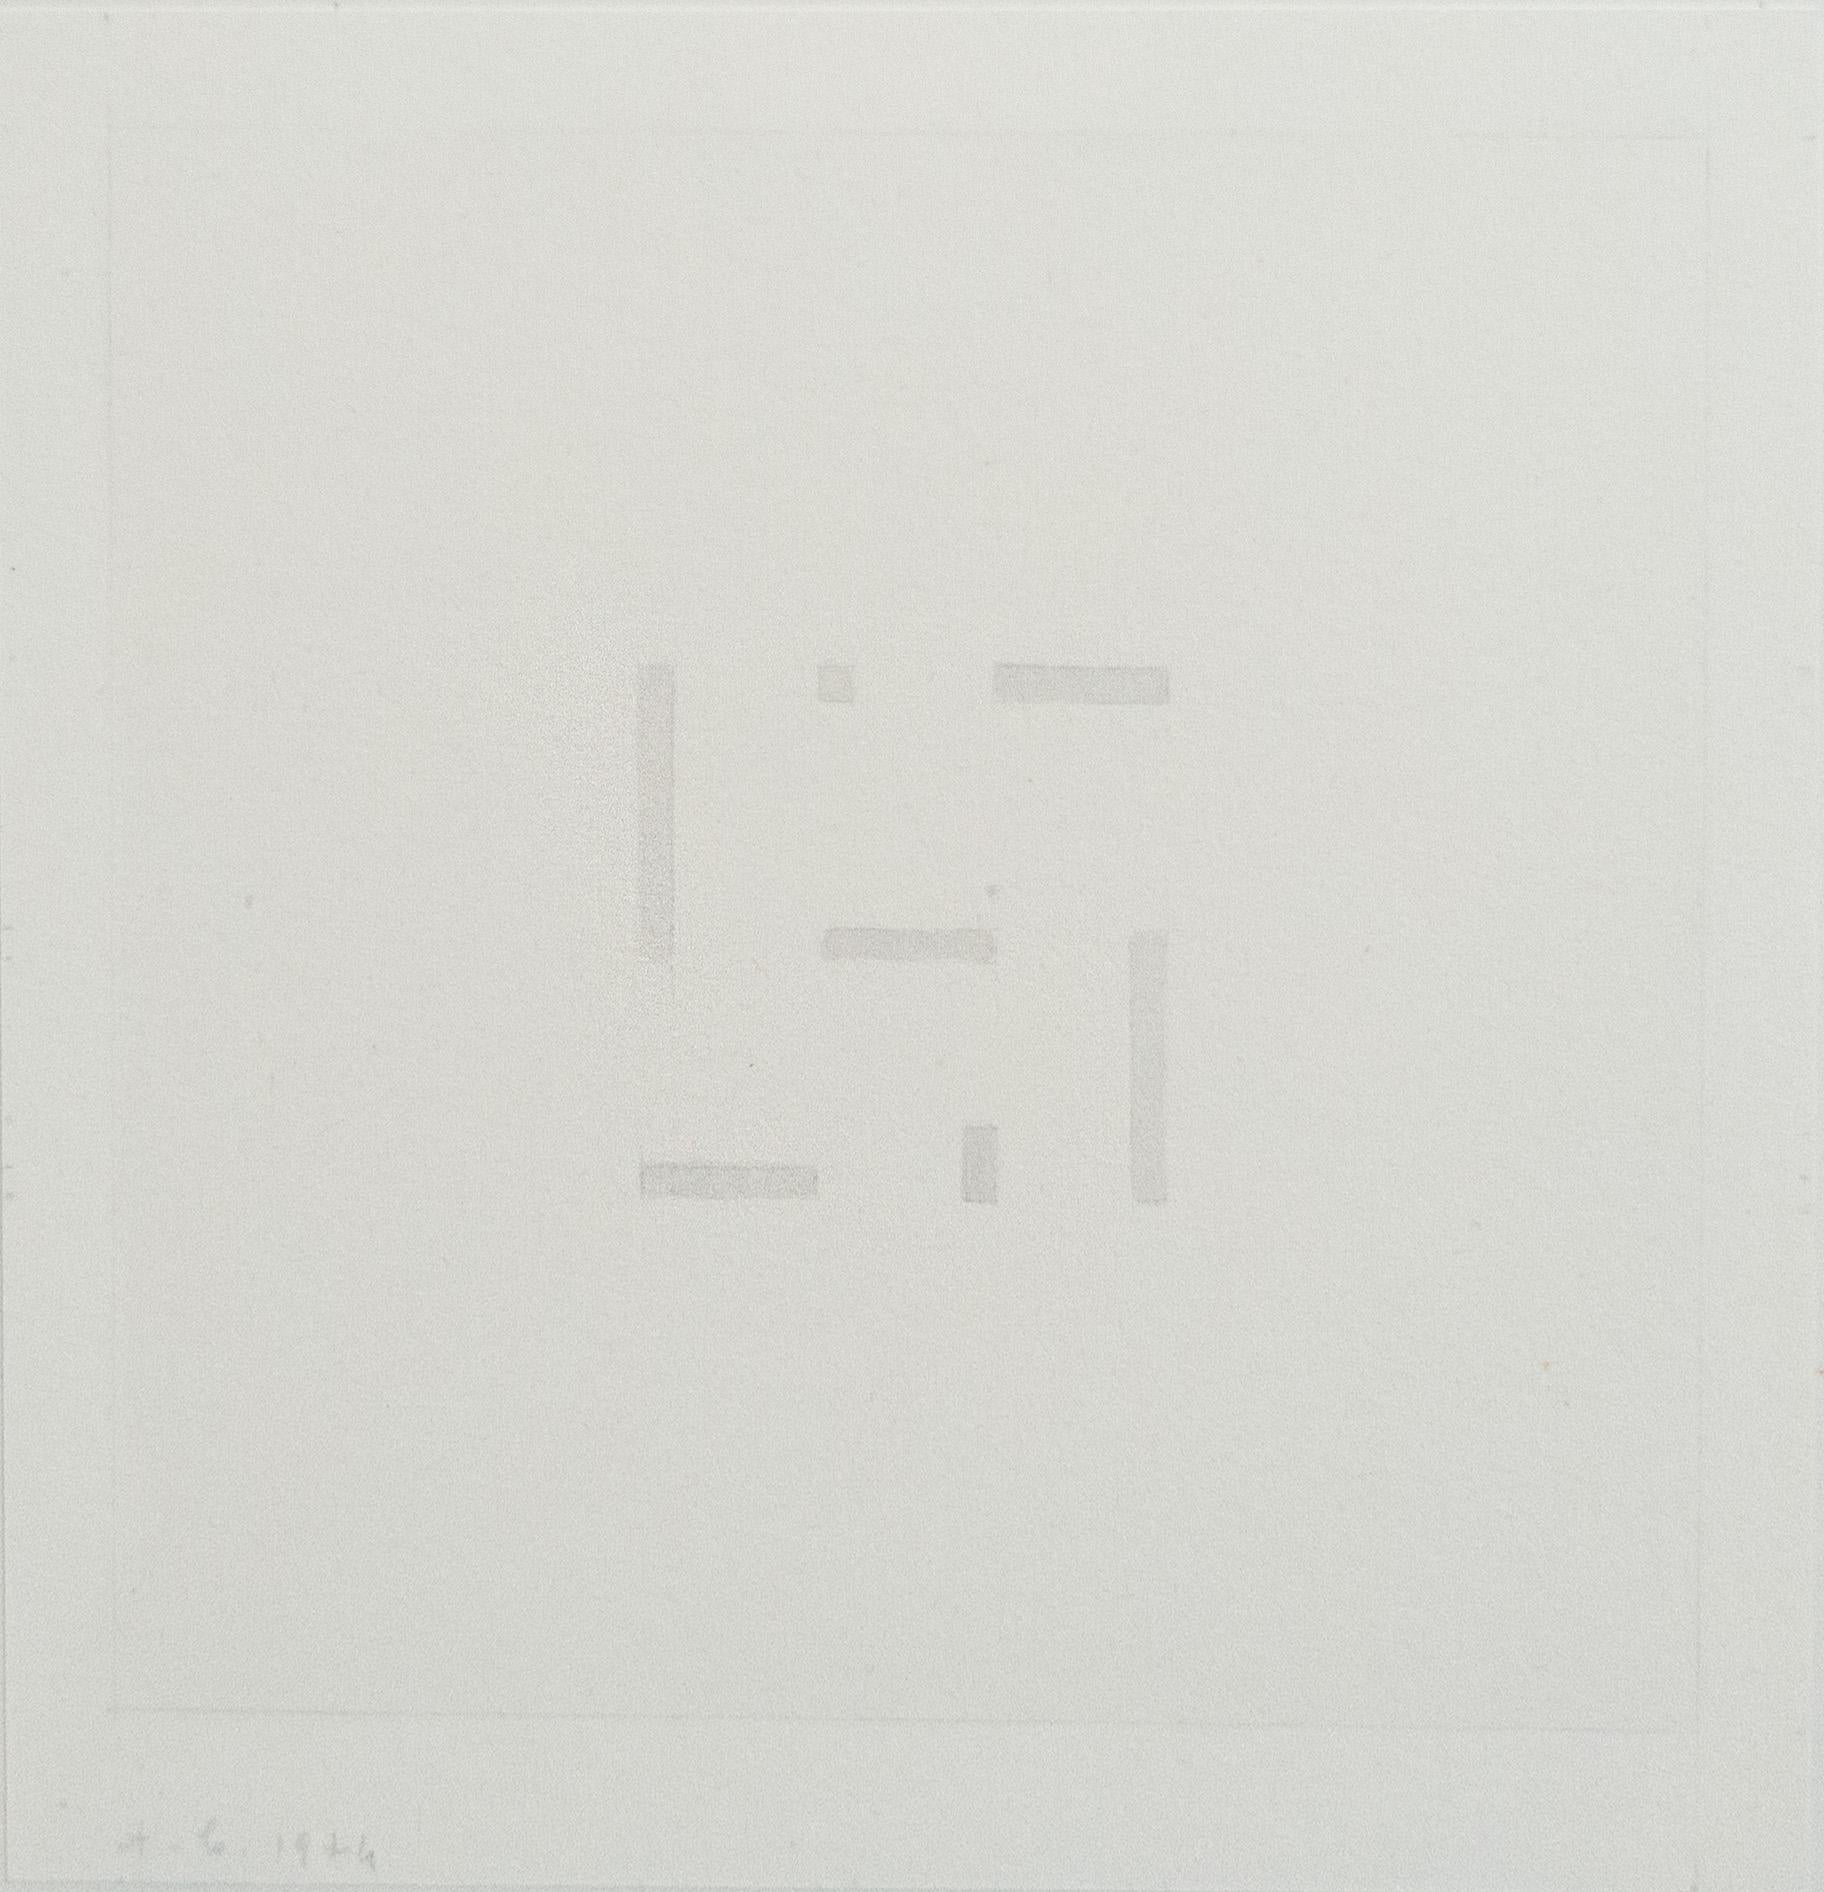 Antonio Calderara Abstract Drawing - Gray constellation A, abstraction, Italian art, minimalism 1974